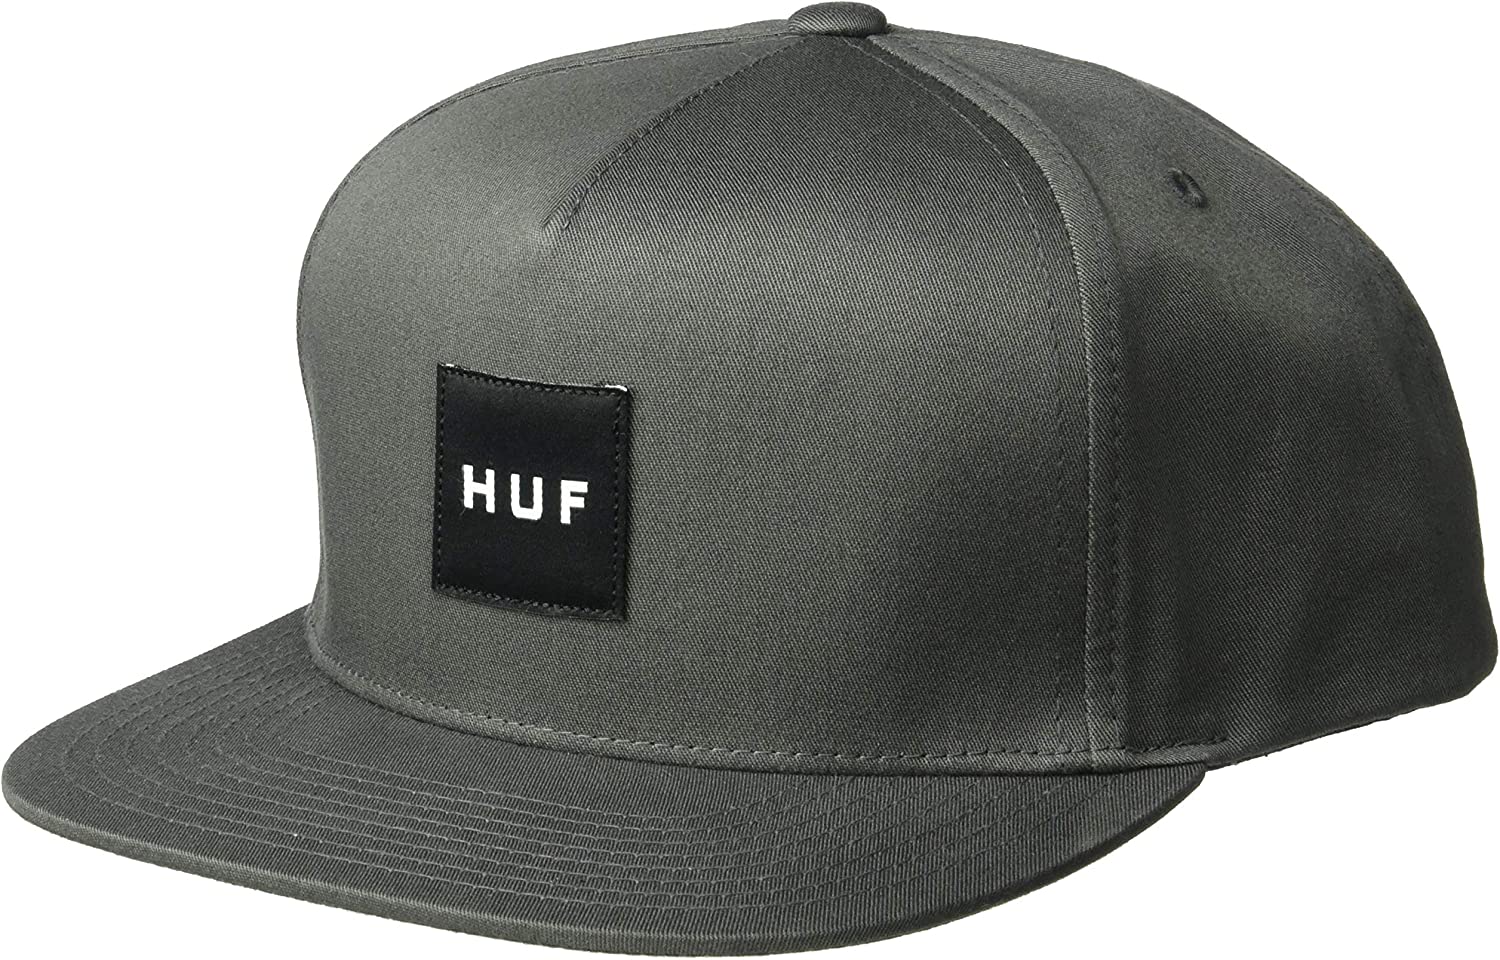 Huf 灰色男士鸭舌帽 Ht00300-charc In Gray